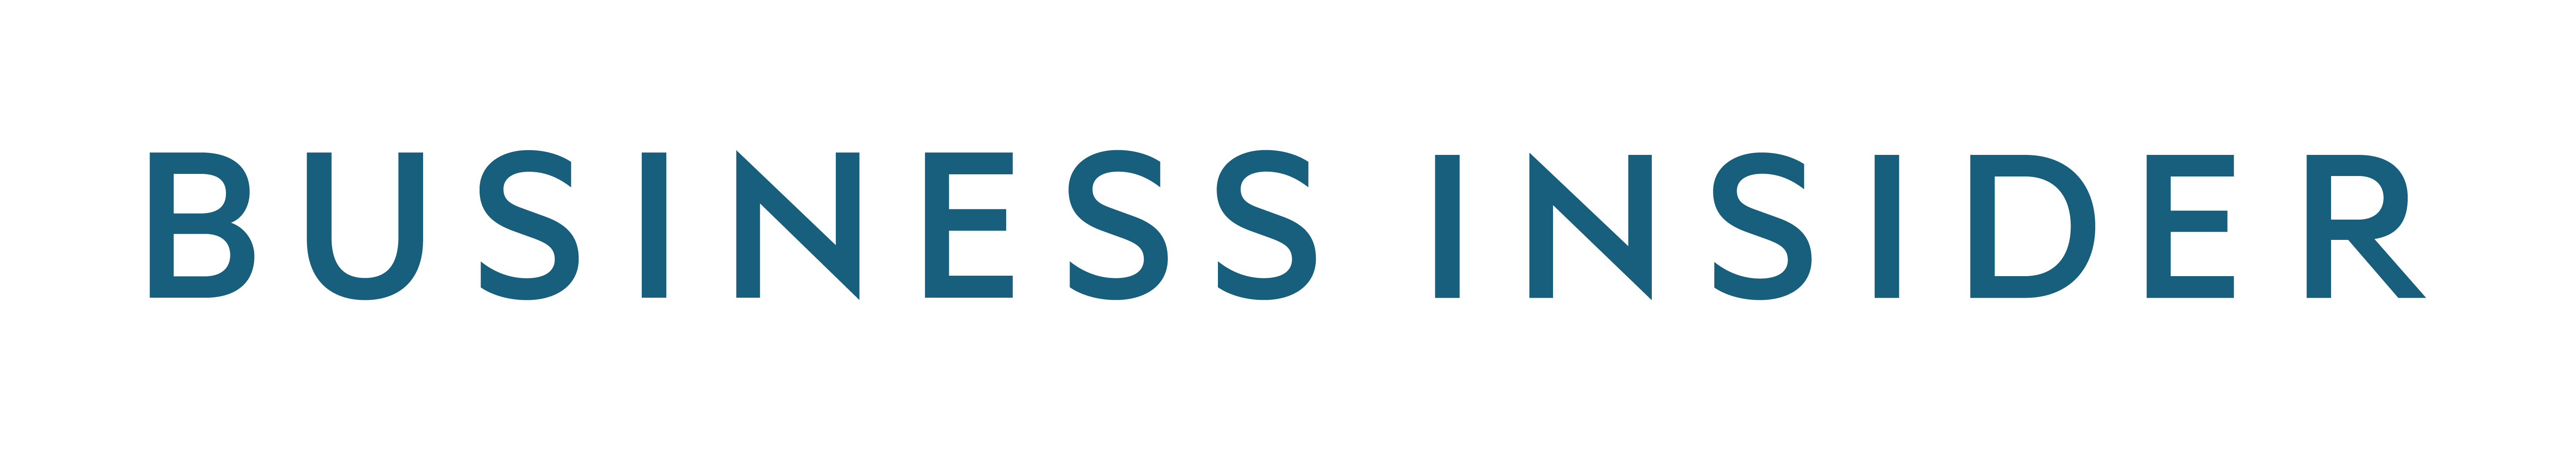 Wide Logo - Business Insider Logos